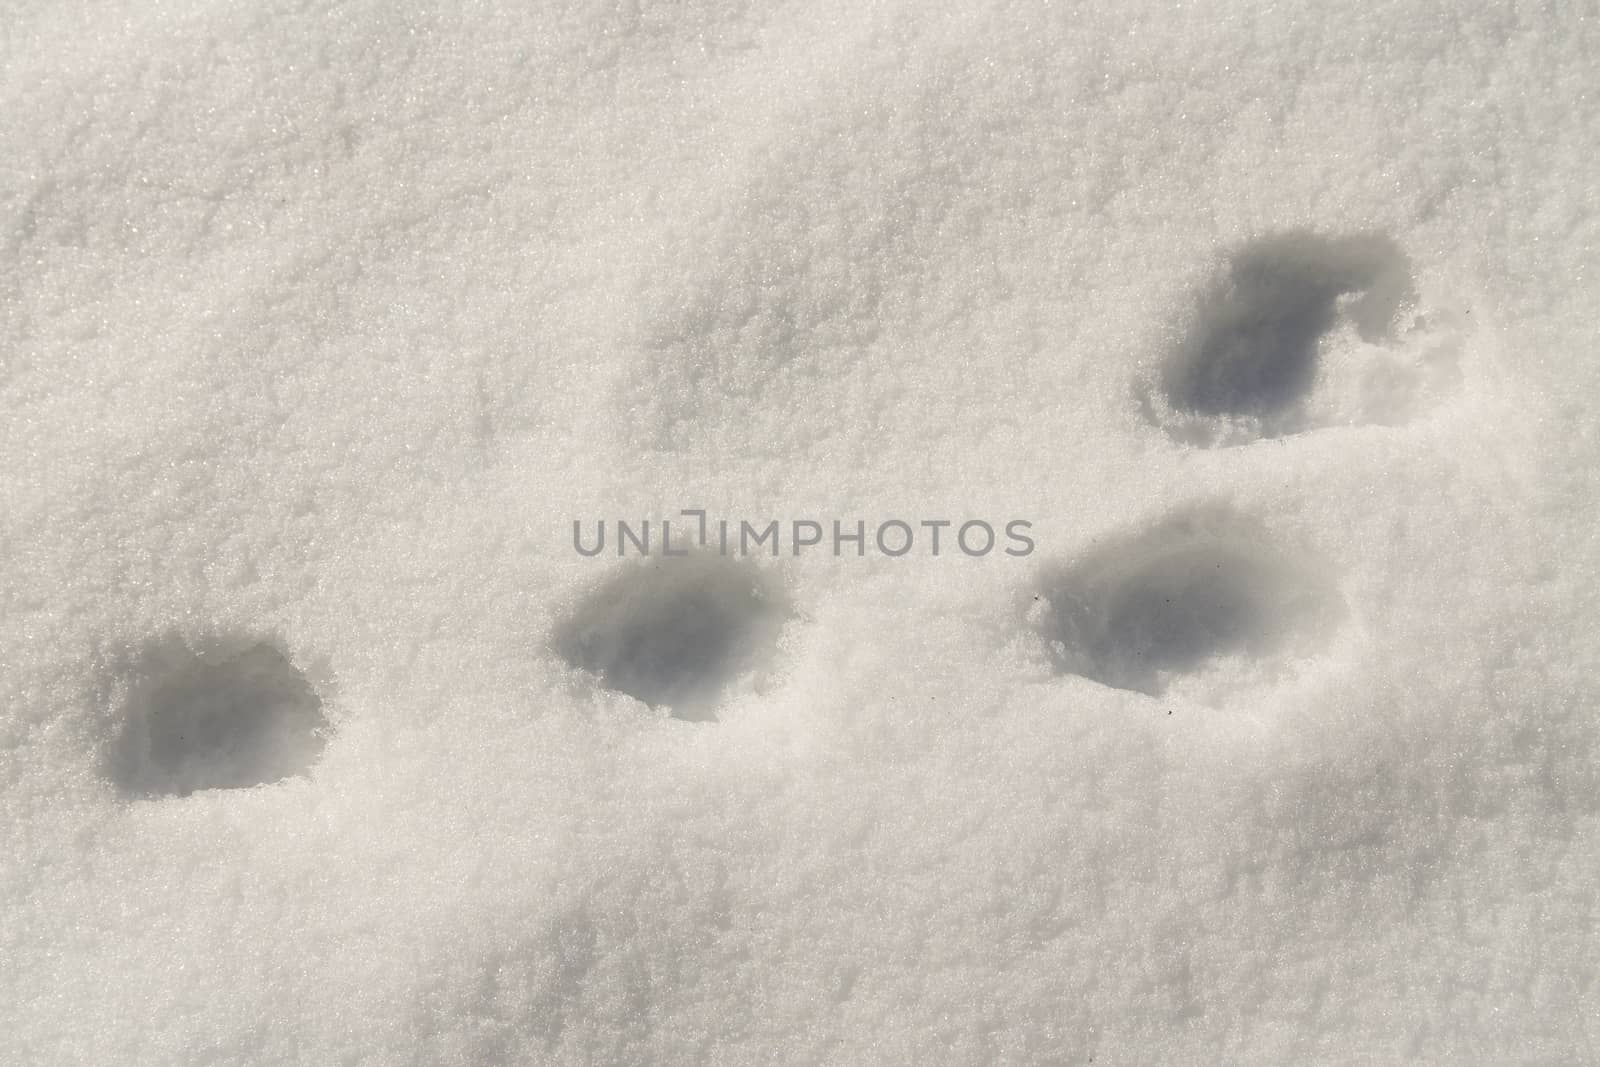 Rabbit tracks in the snow